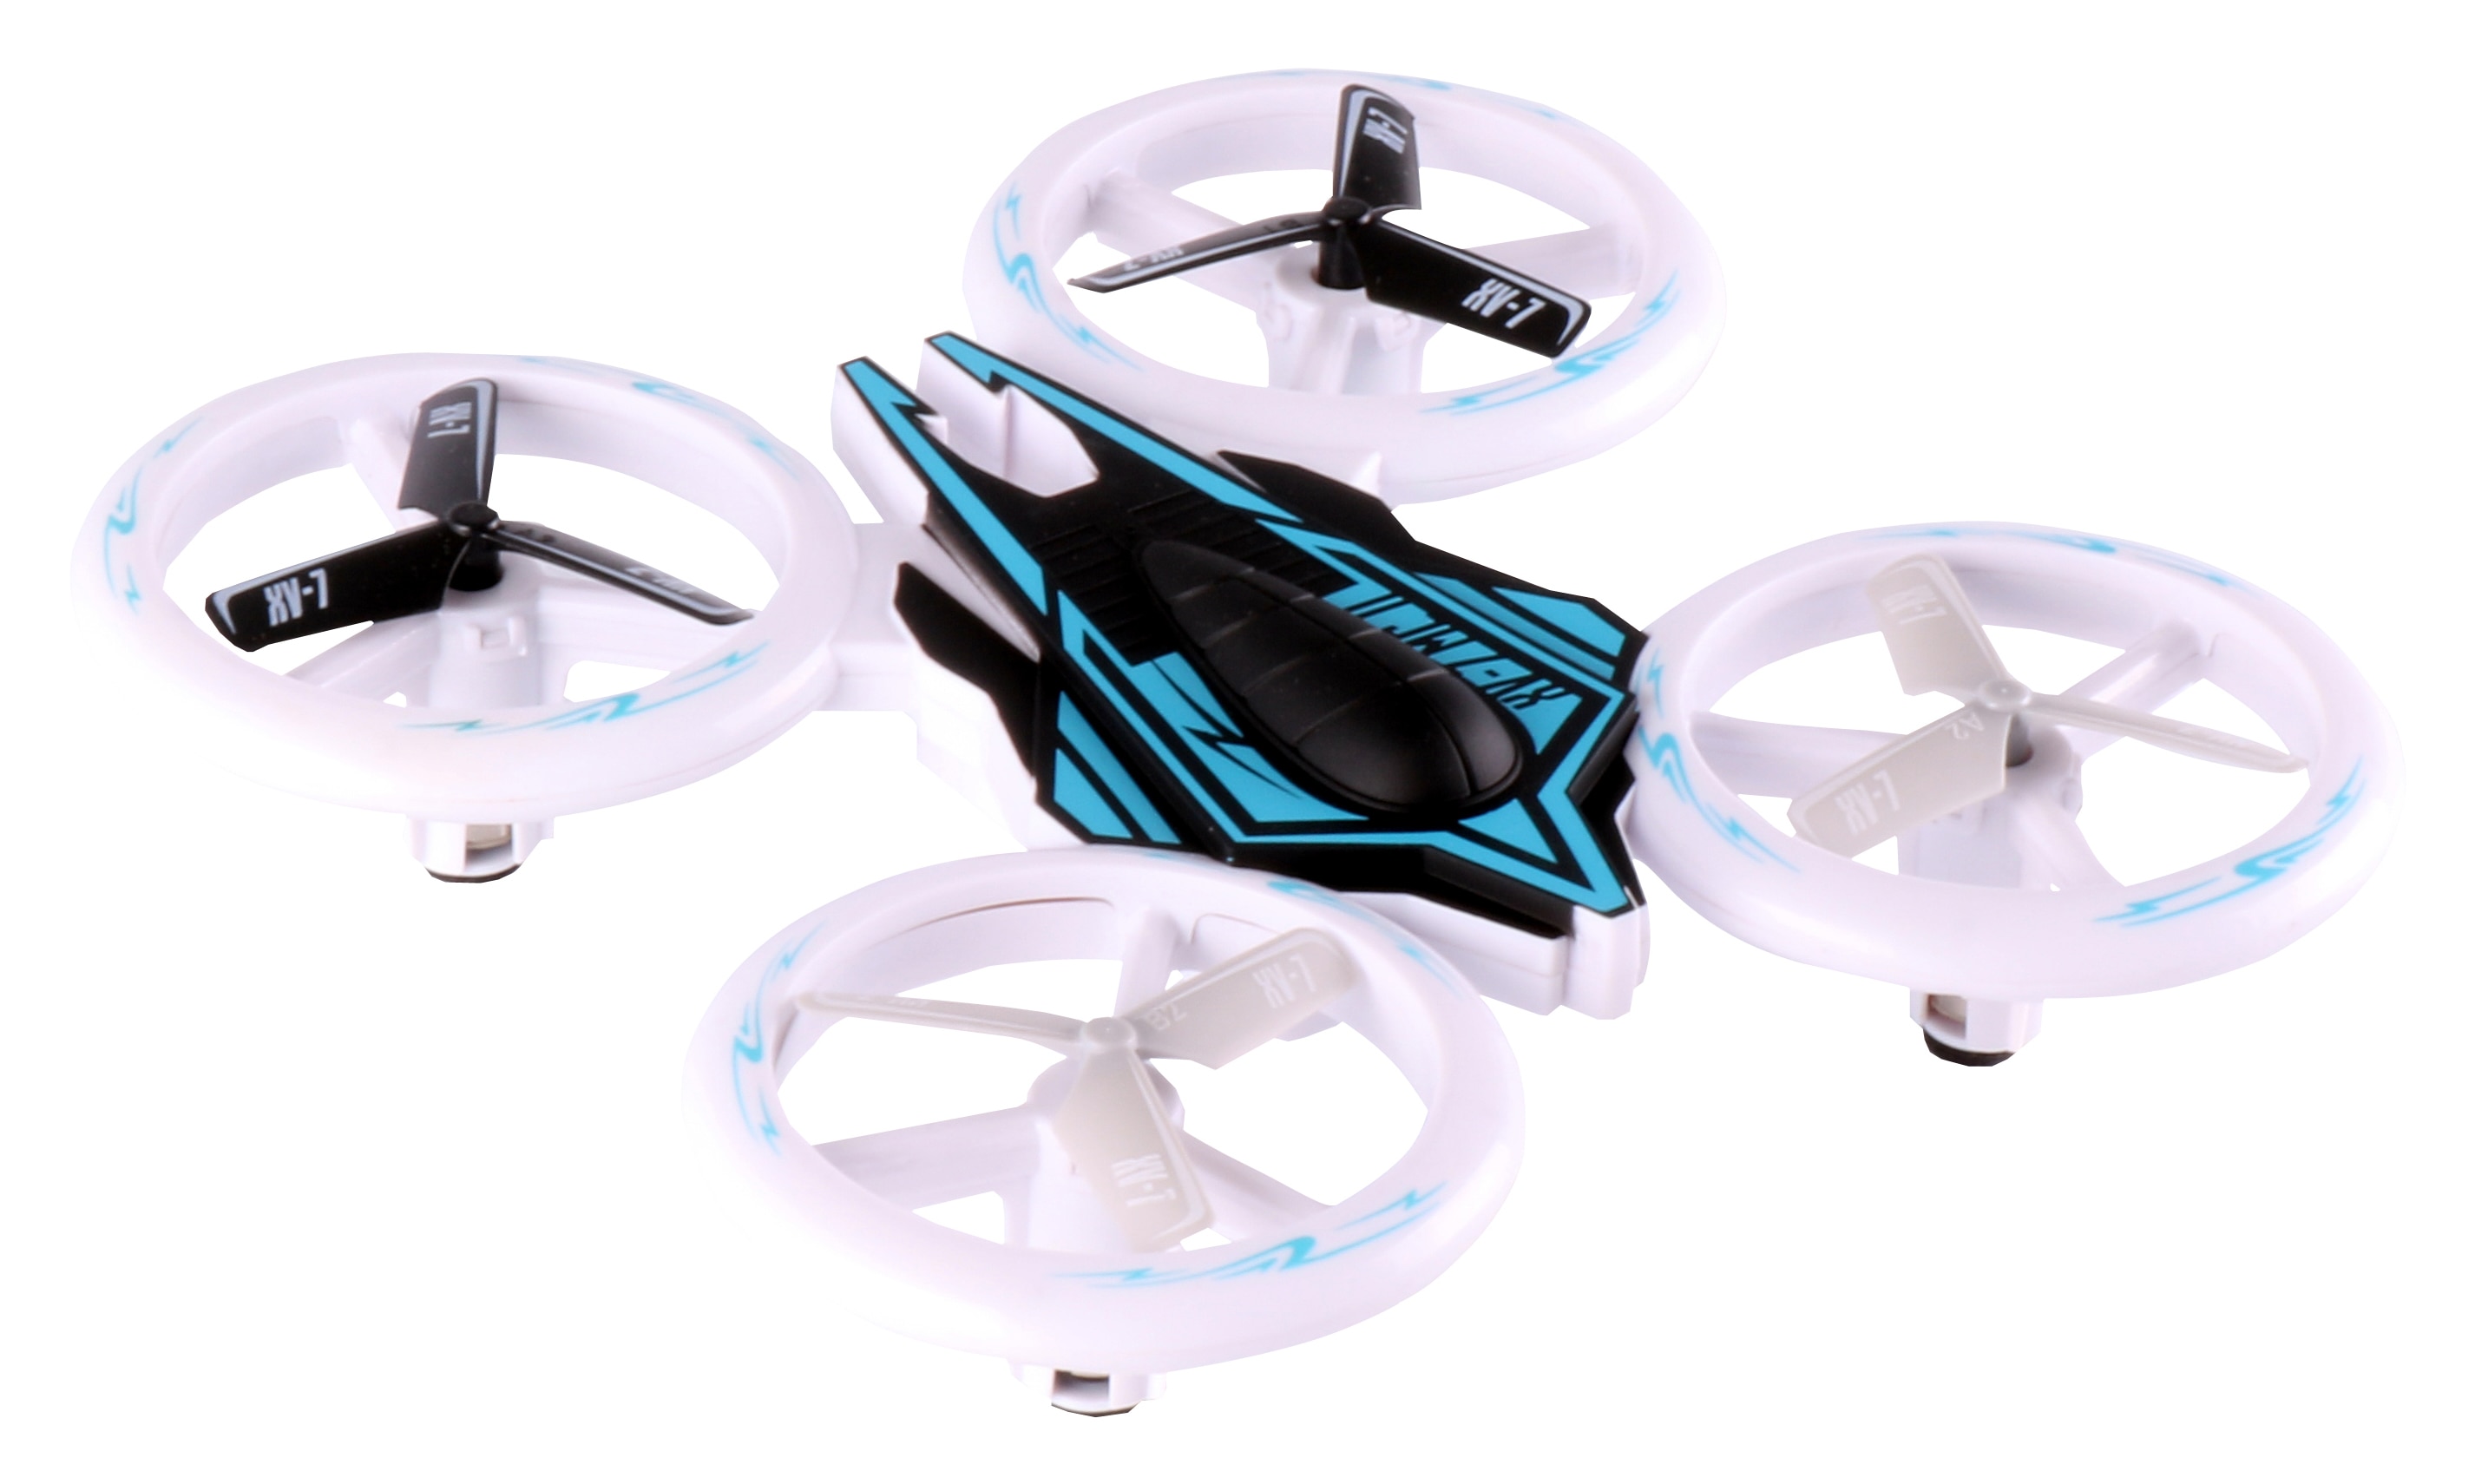 microlite rc quadcopter drone